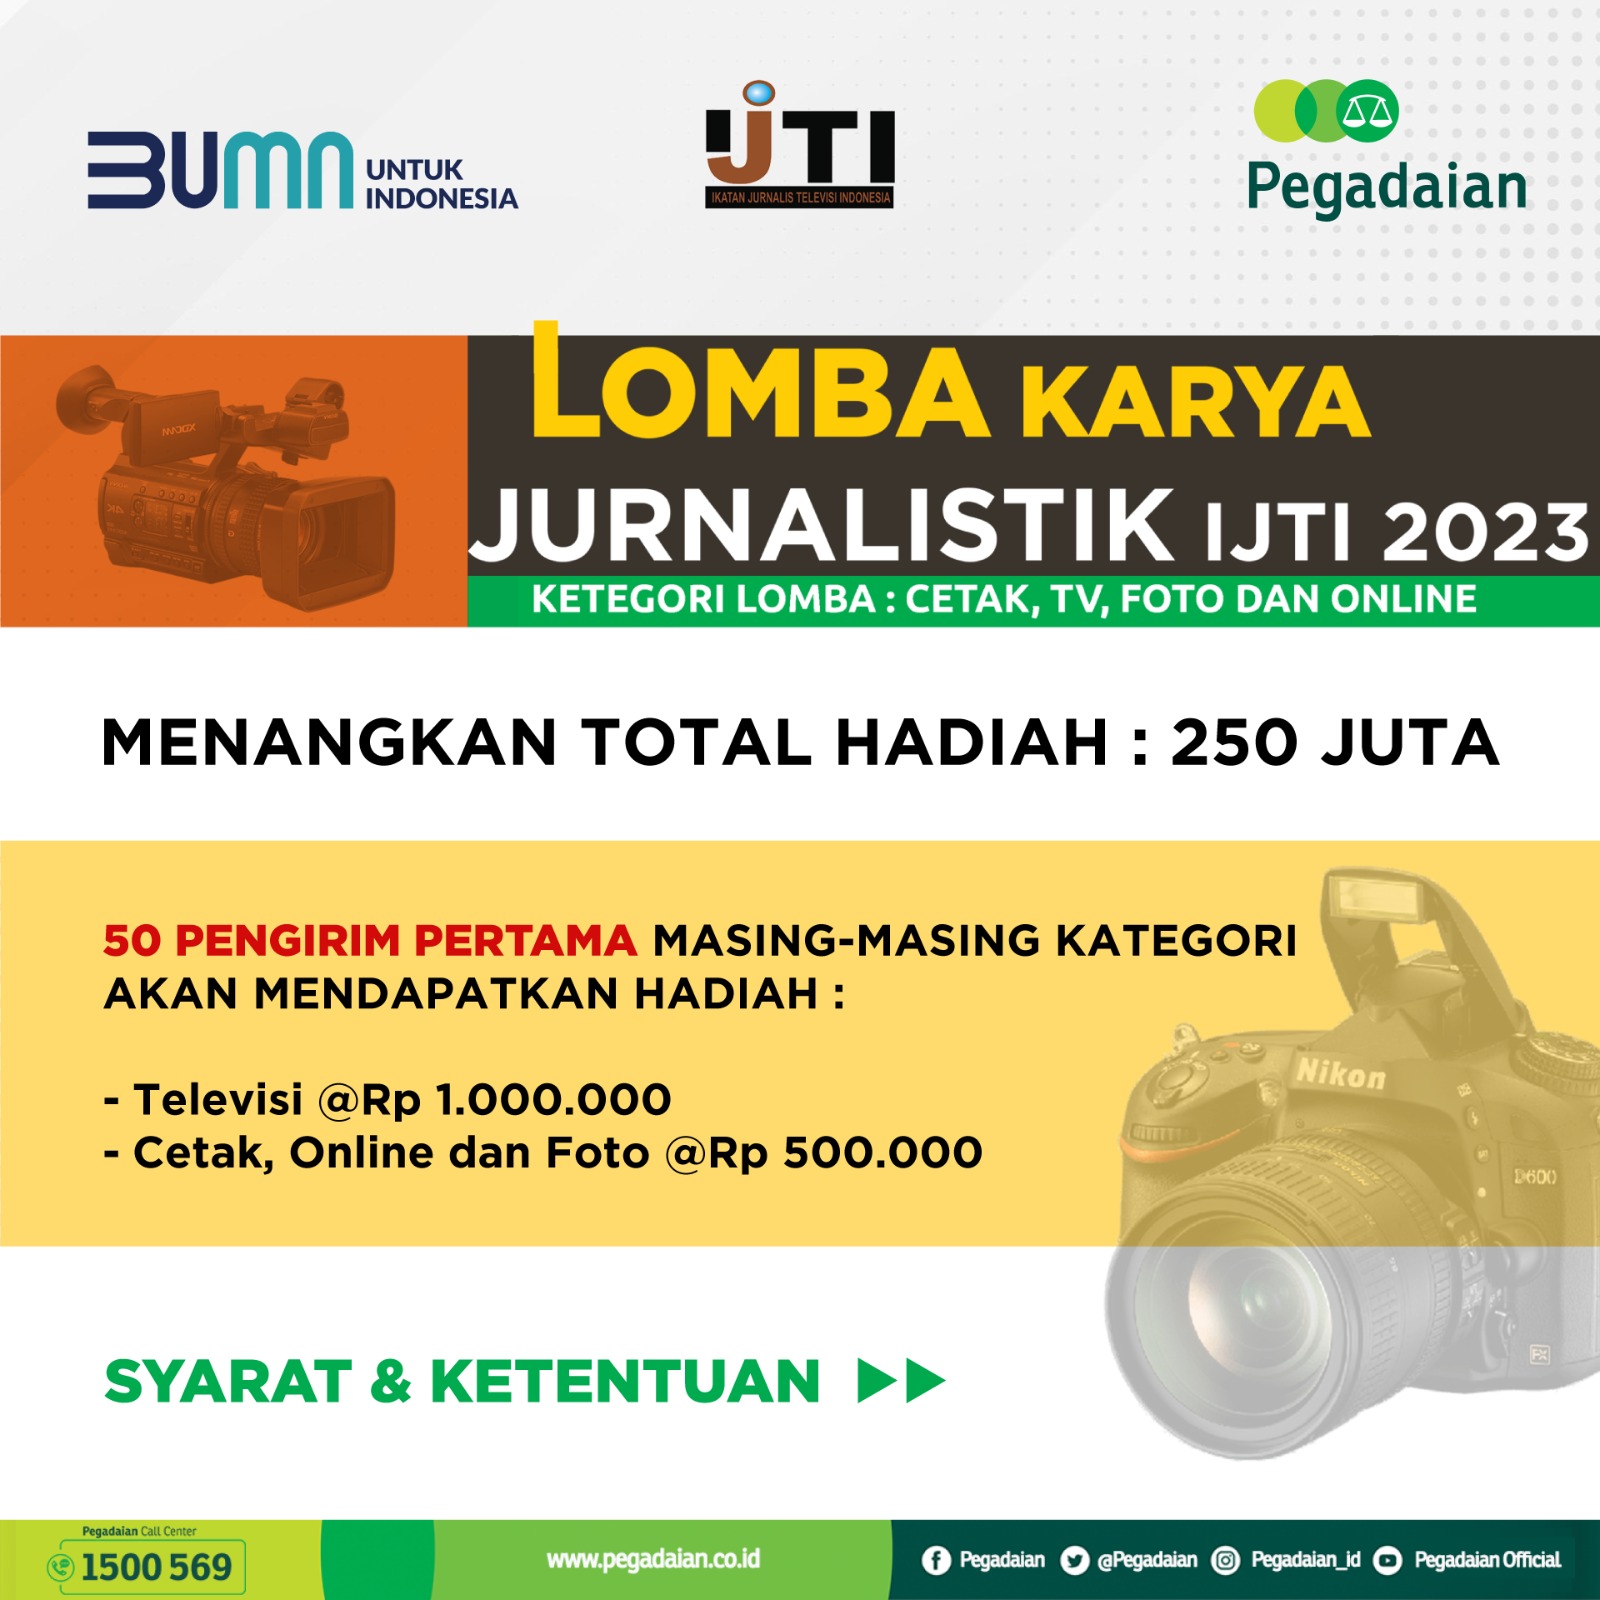 Pegadaian Gelar Lomba Karya Jurnalistik IJTI 2023, Rebut Total Hadiah Rp250 Juta